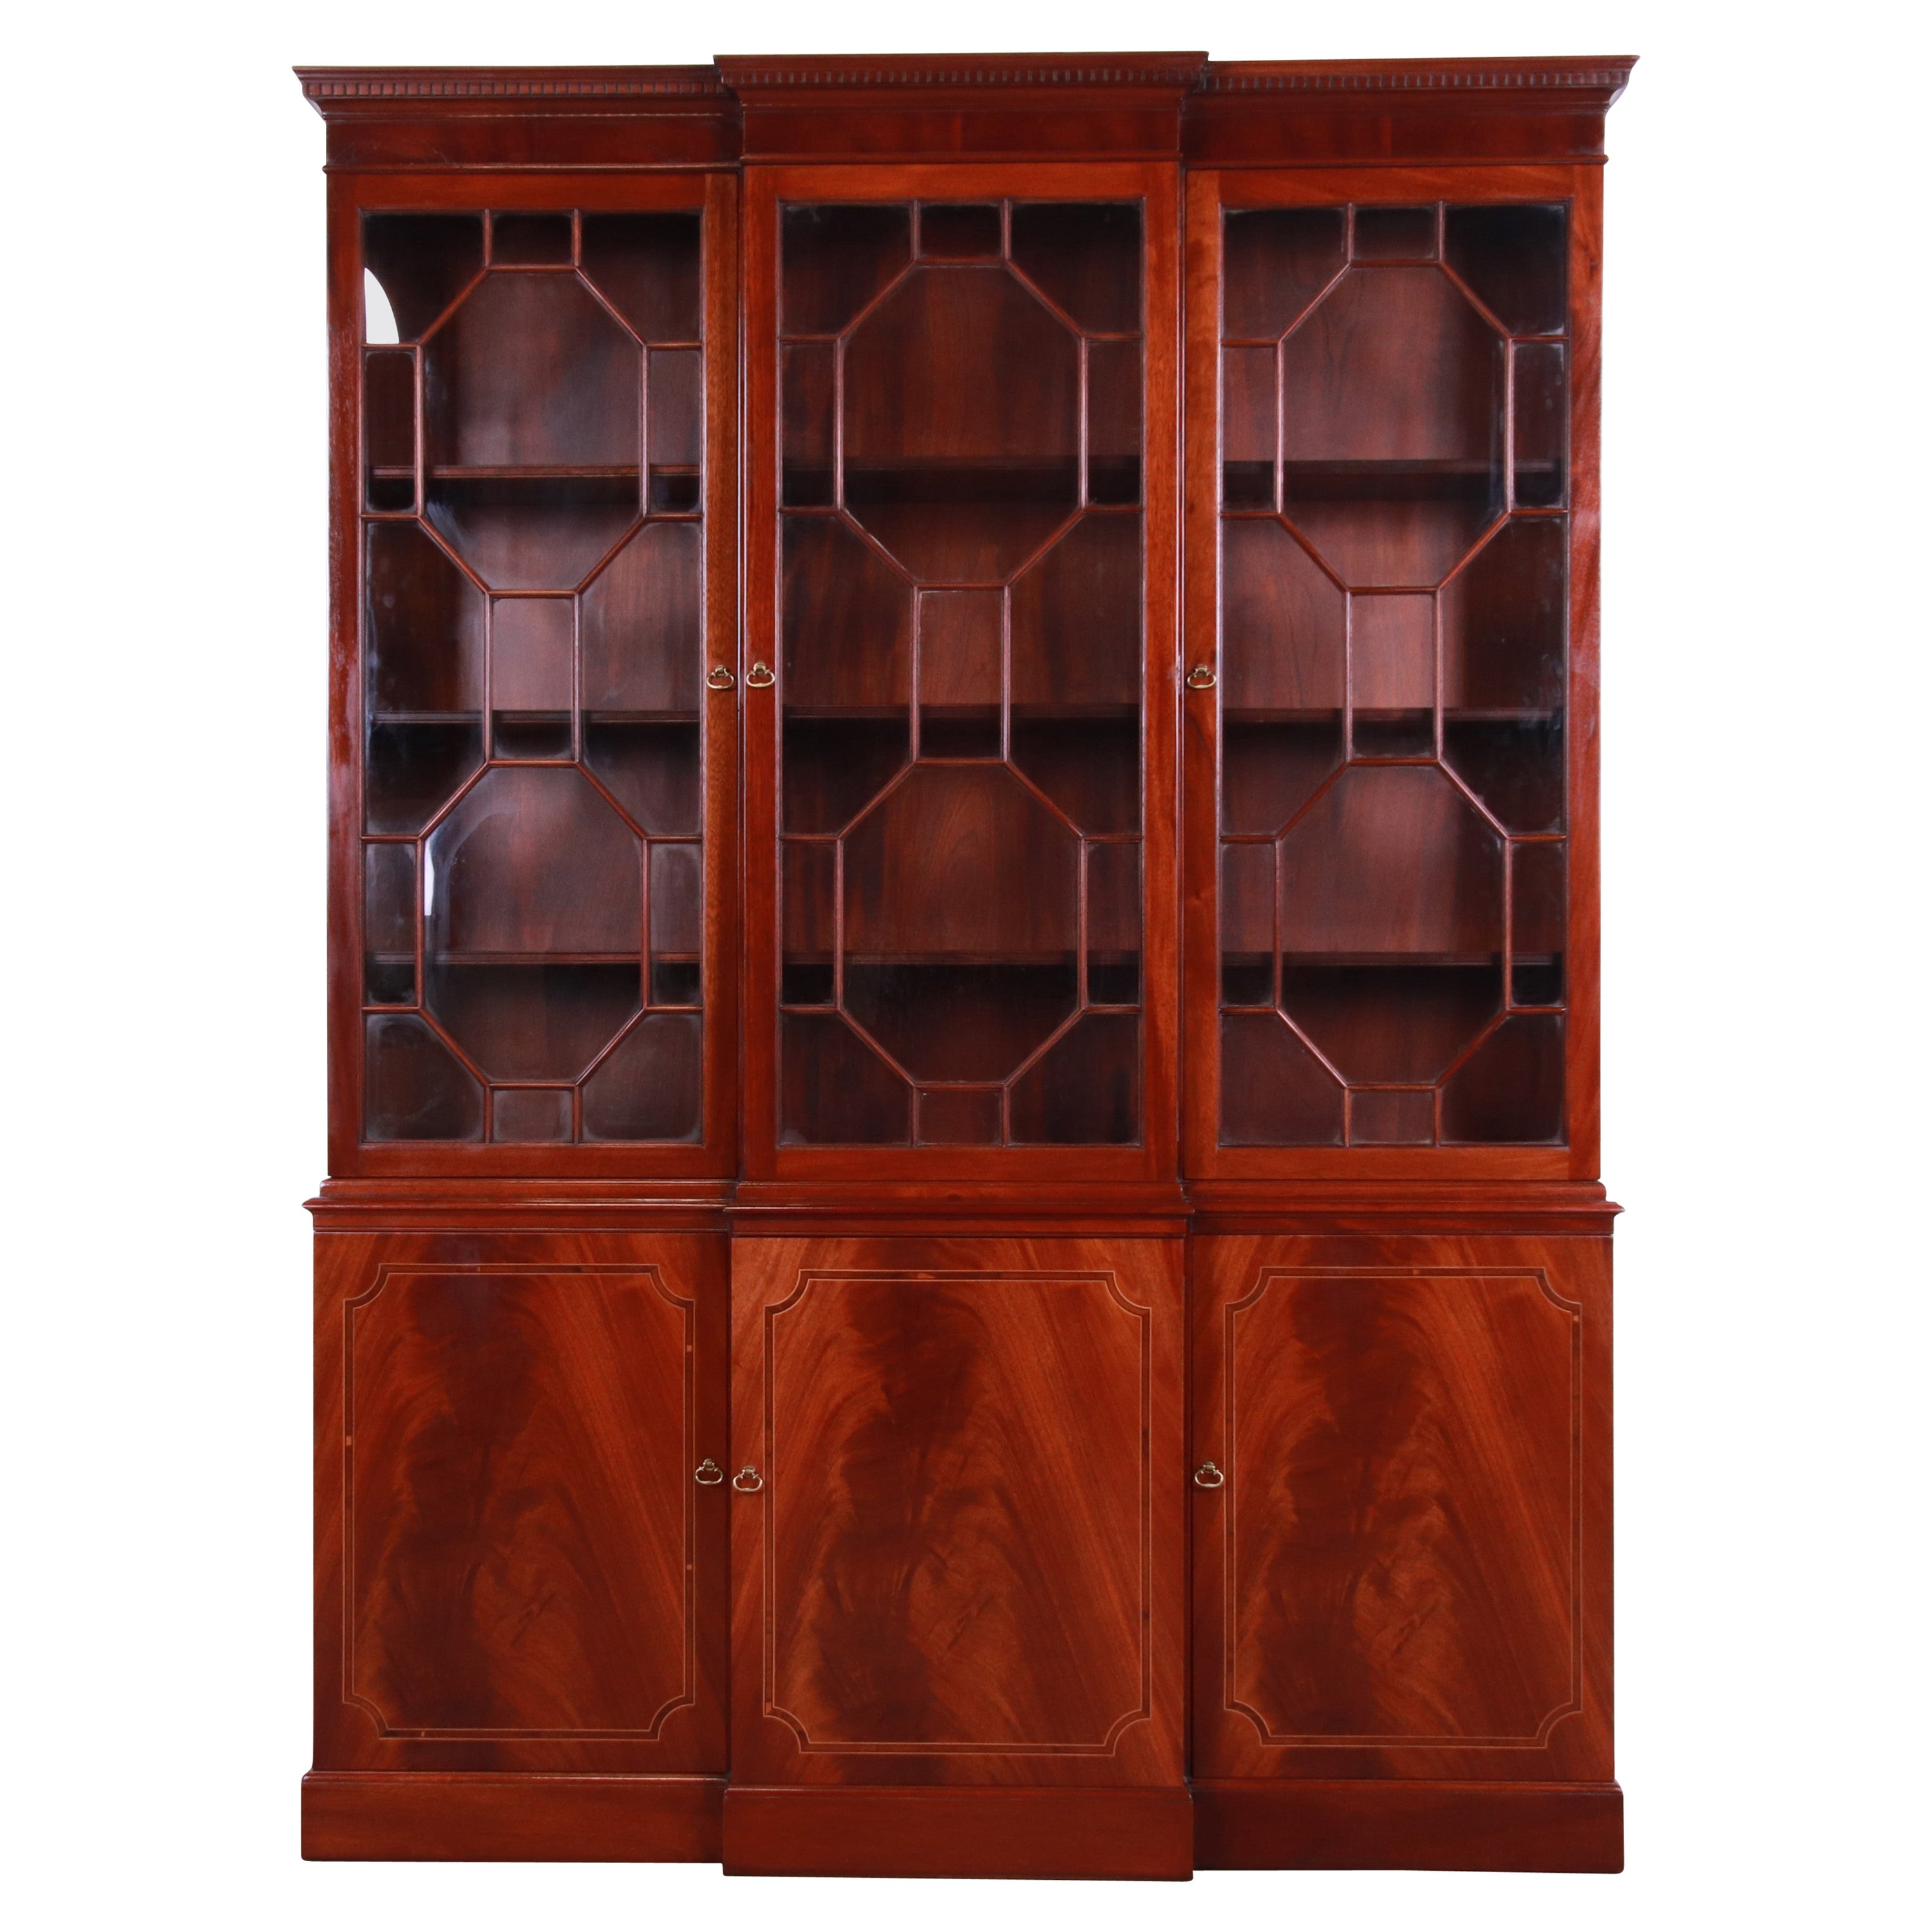 Baker Furniture Georgian Flame Mahogany Breakfront Bookcase Cabinet